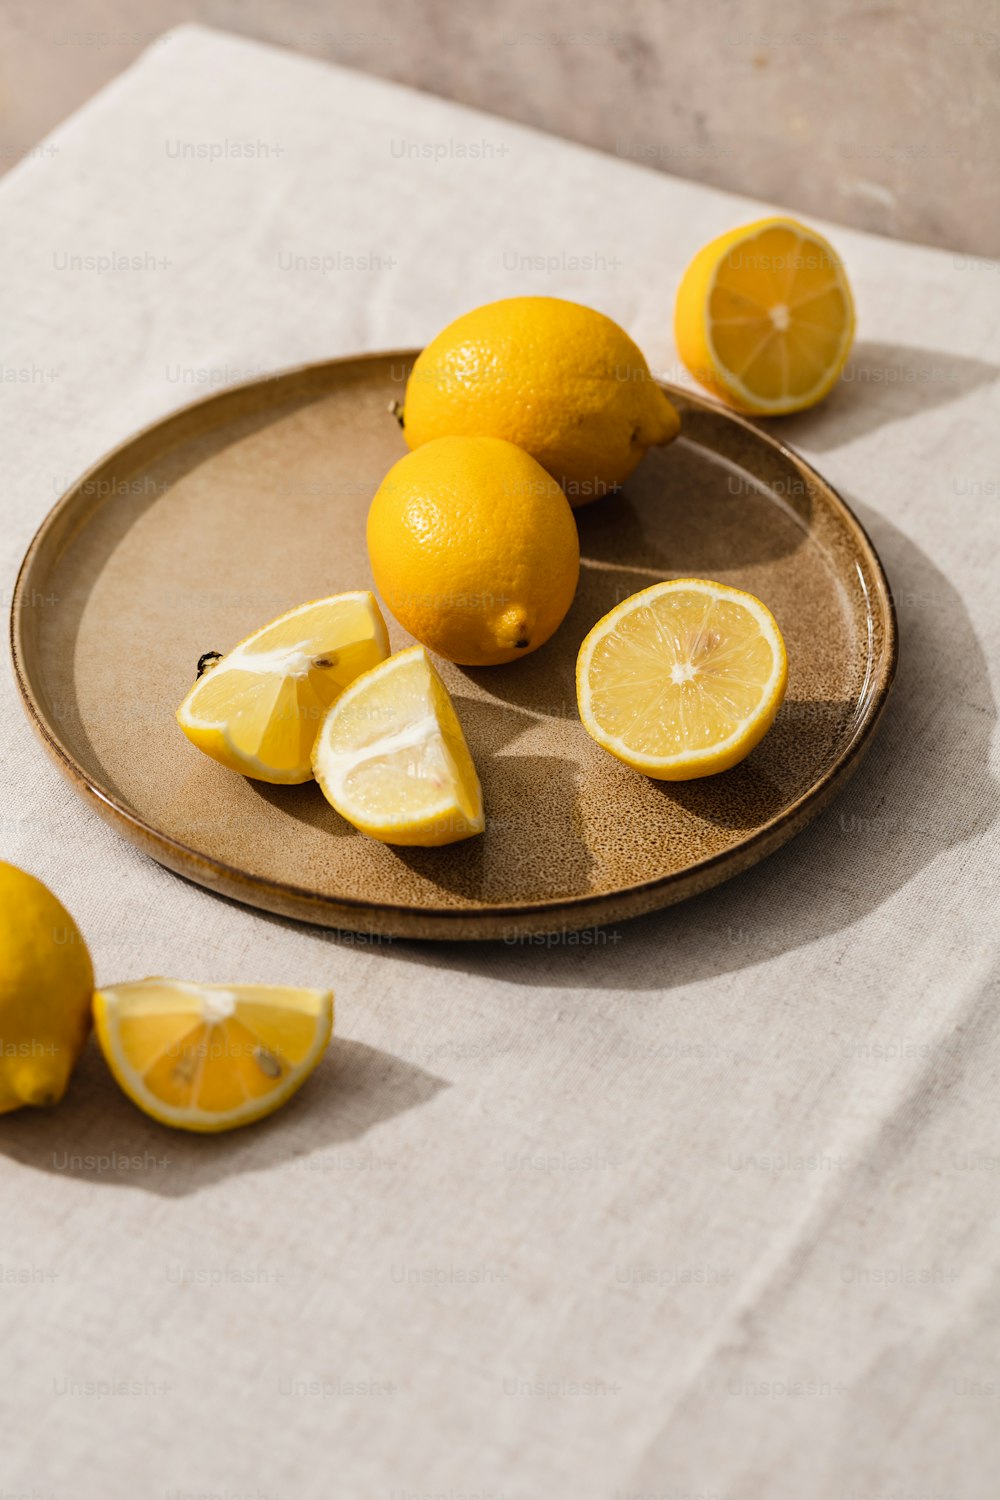 a plate of lemons on a table